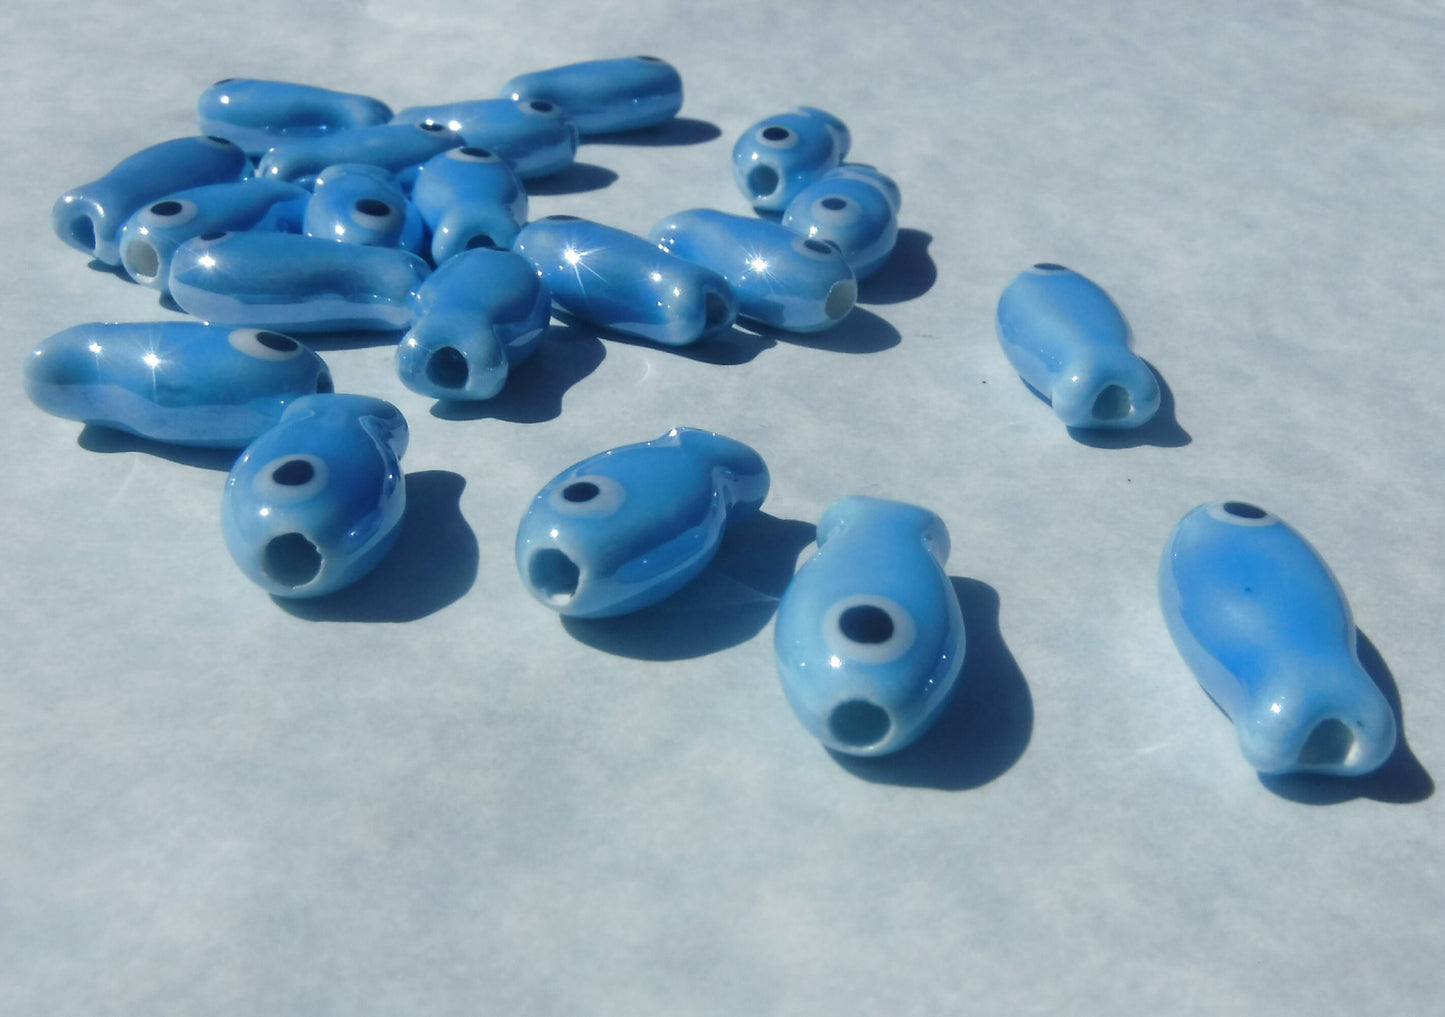 Blue Fish Beads - Ceramic Mosaic Tiles - Small Fish Beads - Jewelry Supplies